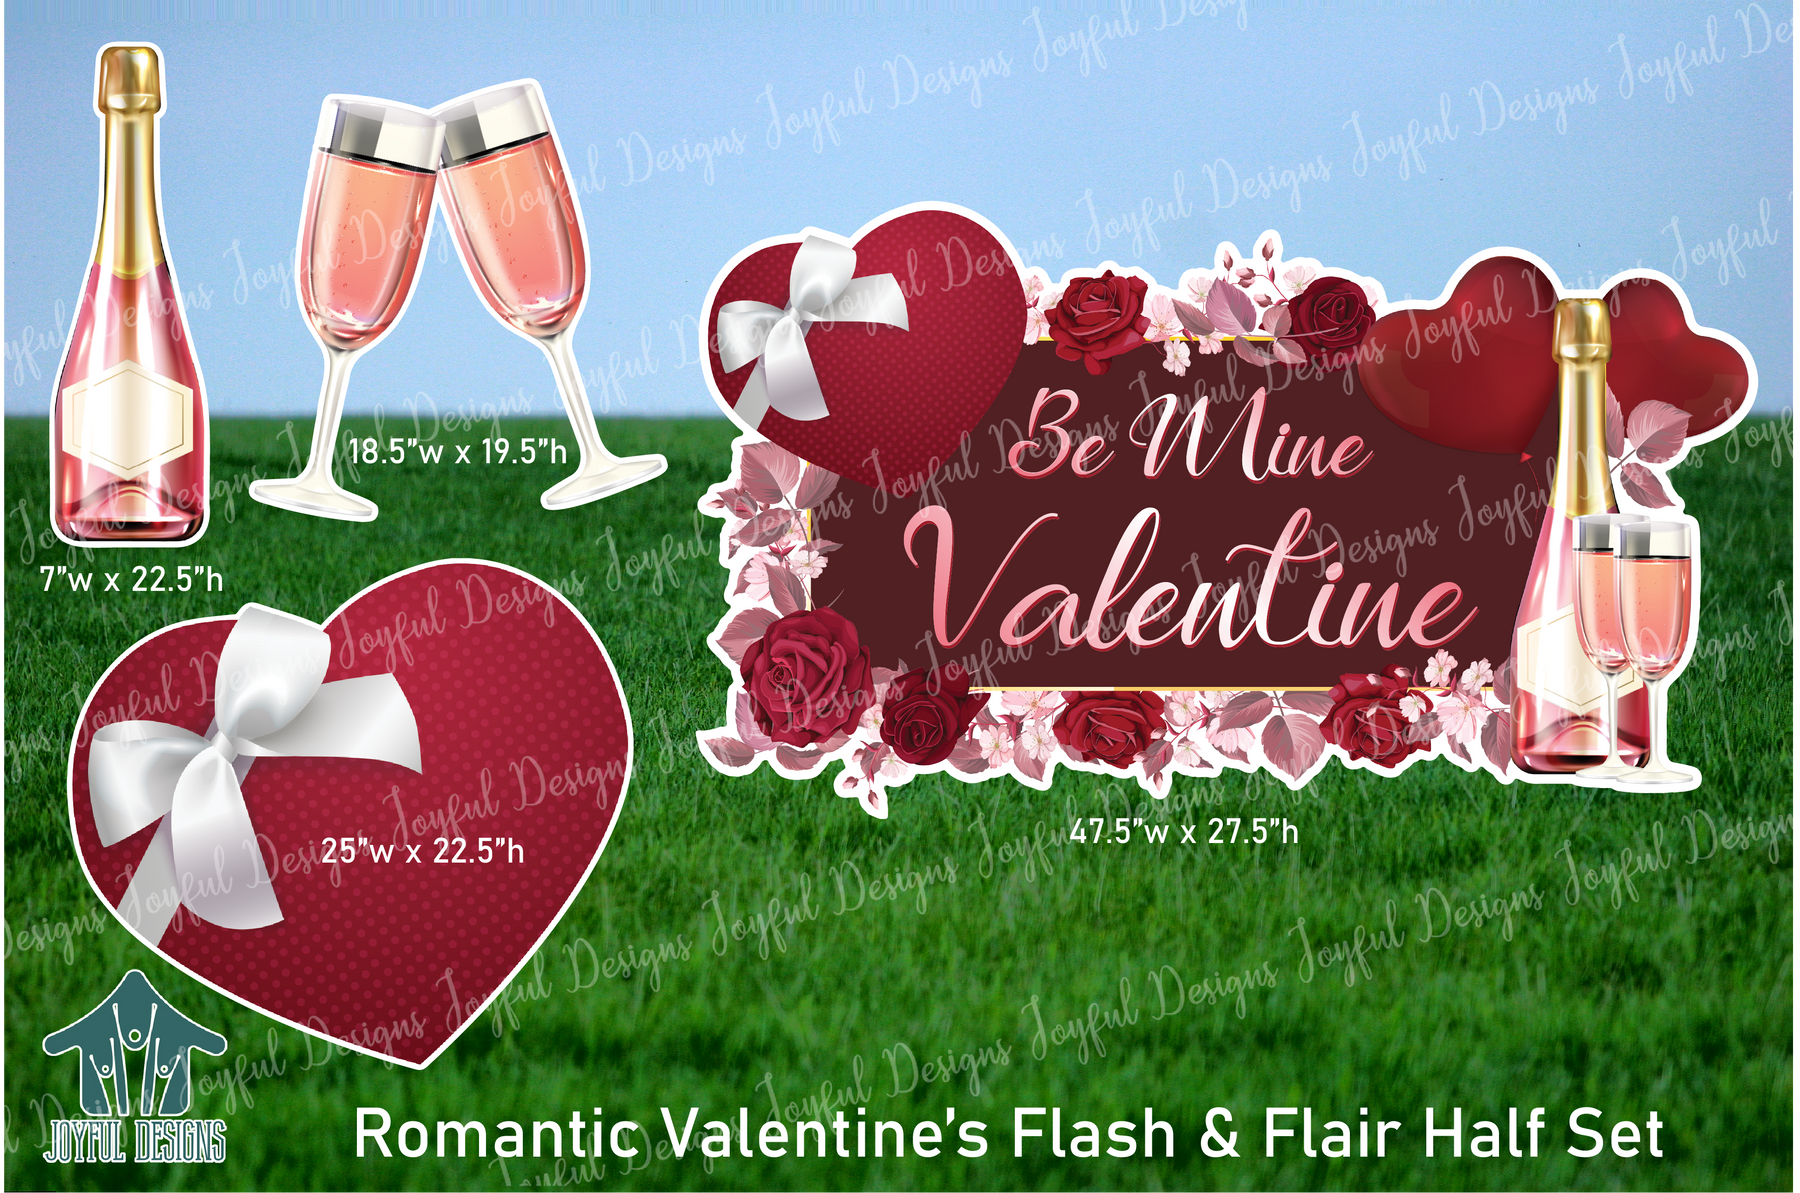 Romantic Valentine's Centerpiece & Flair